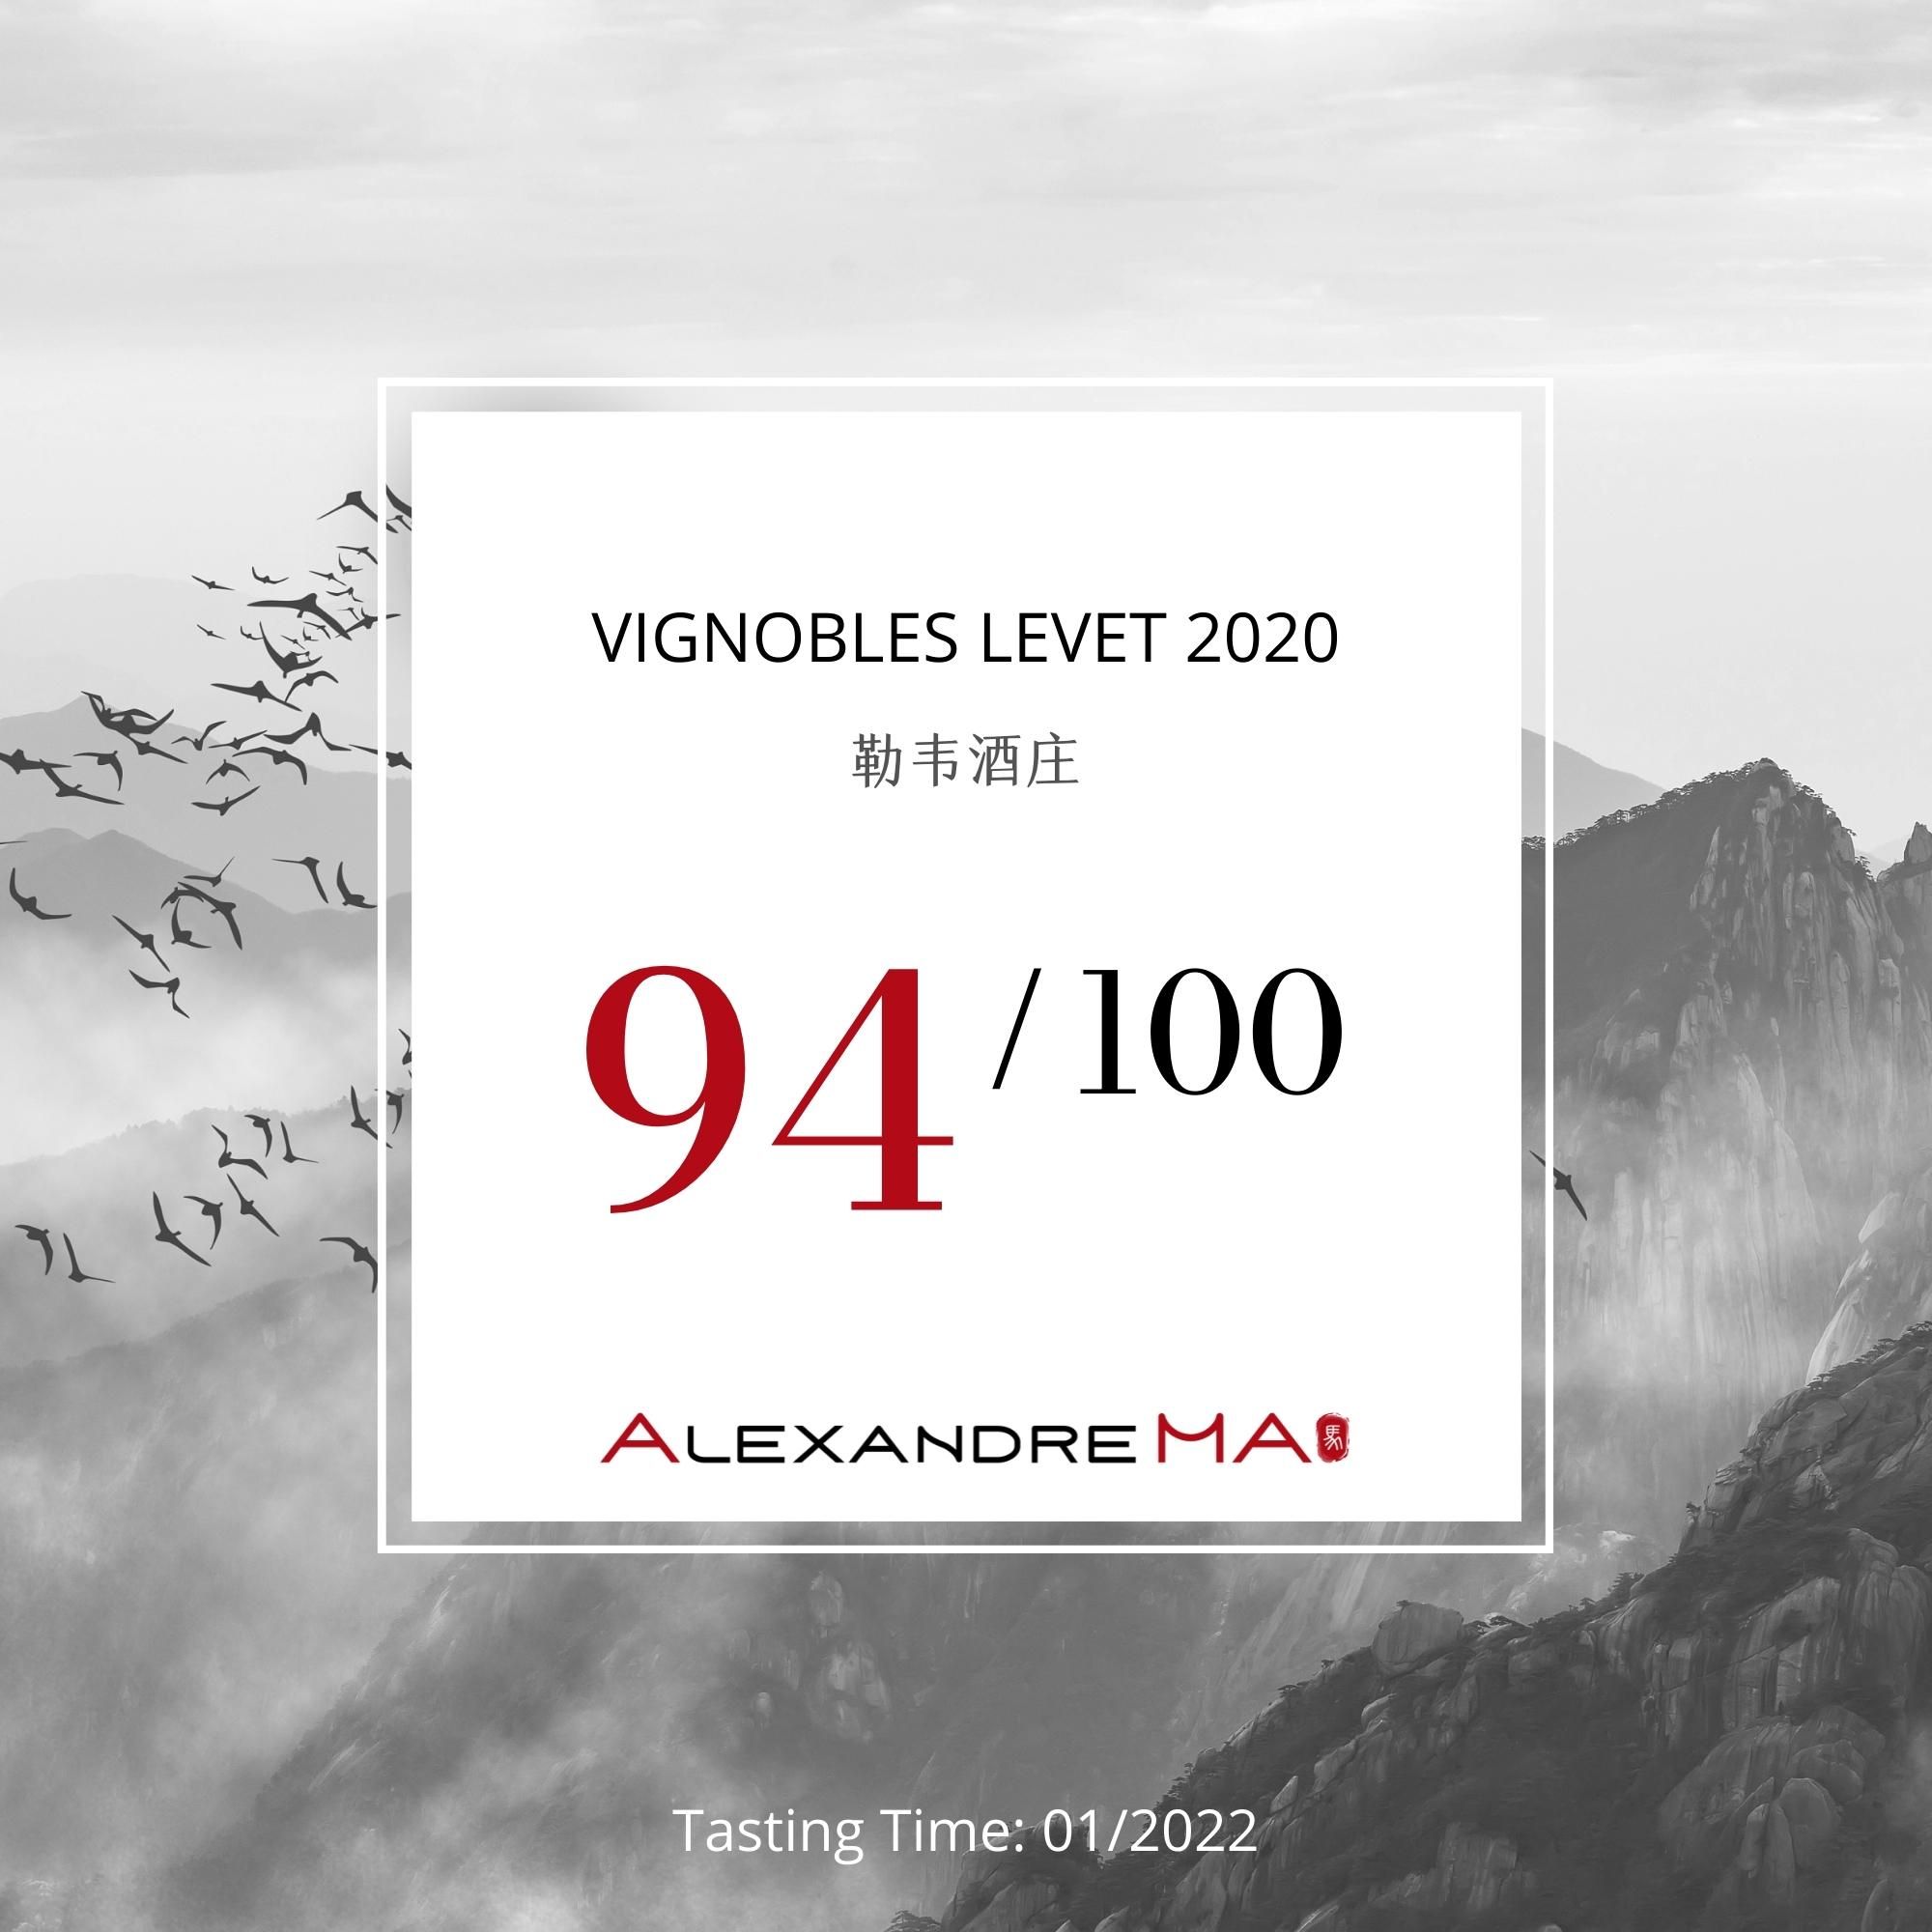 Vignobles Levet 2020 - Alexandre MA